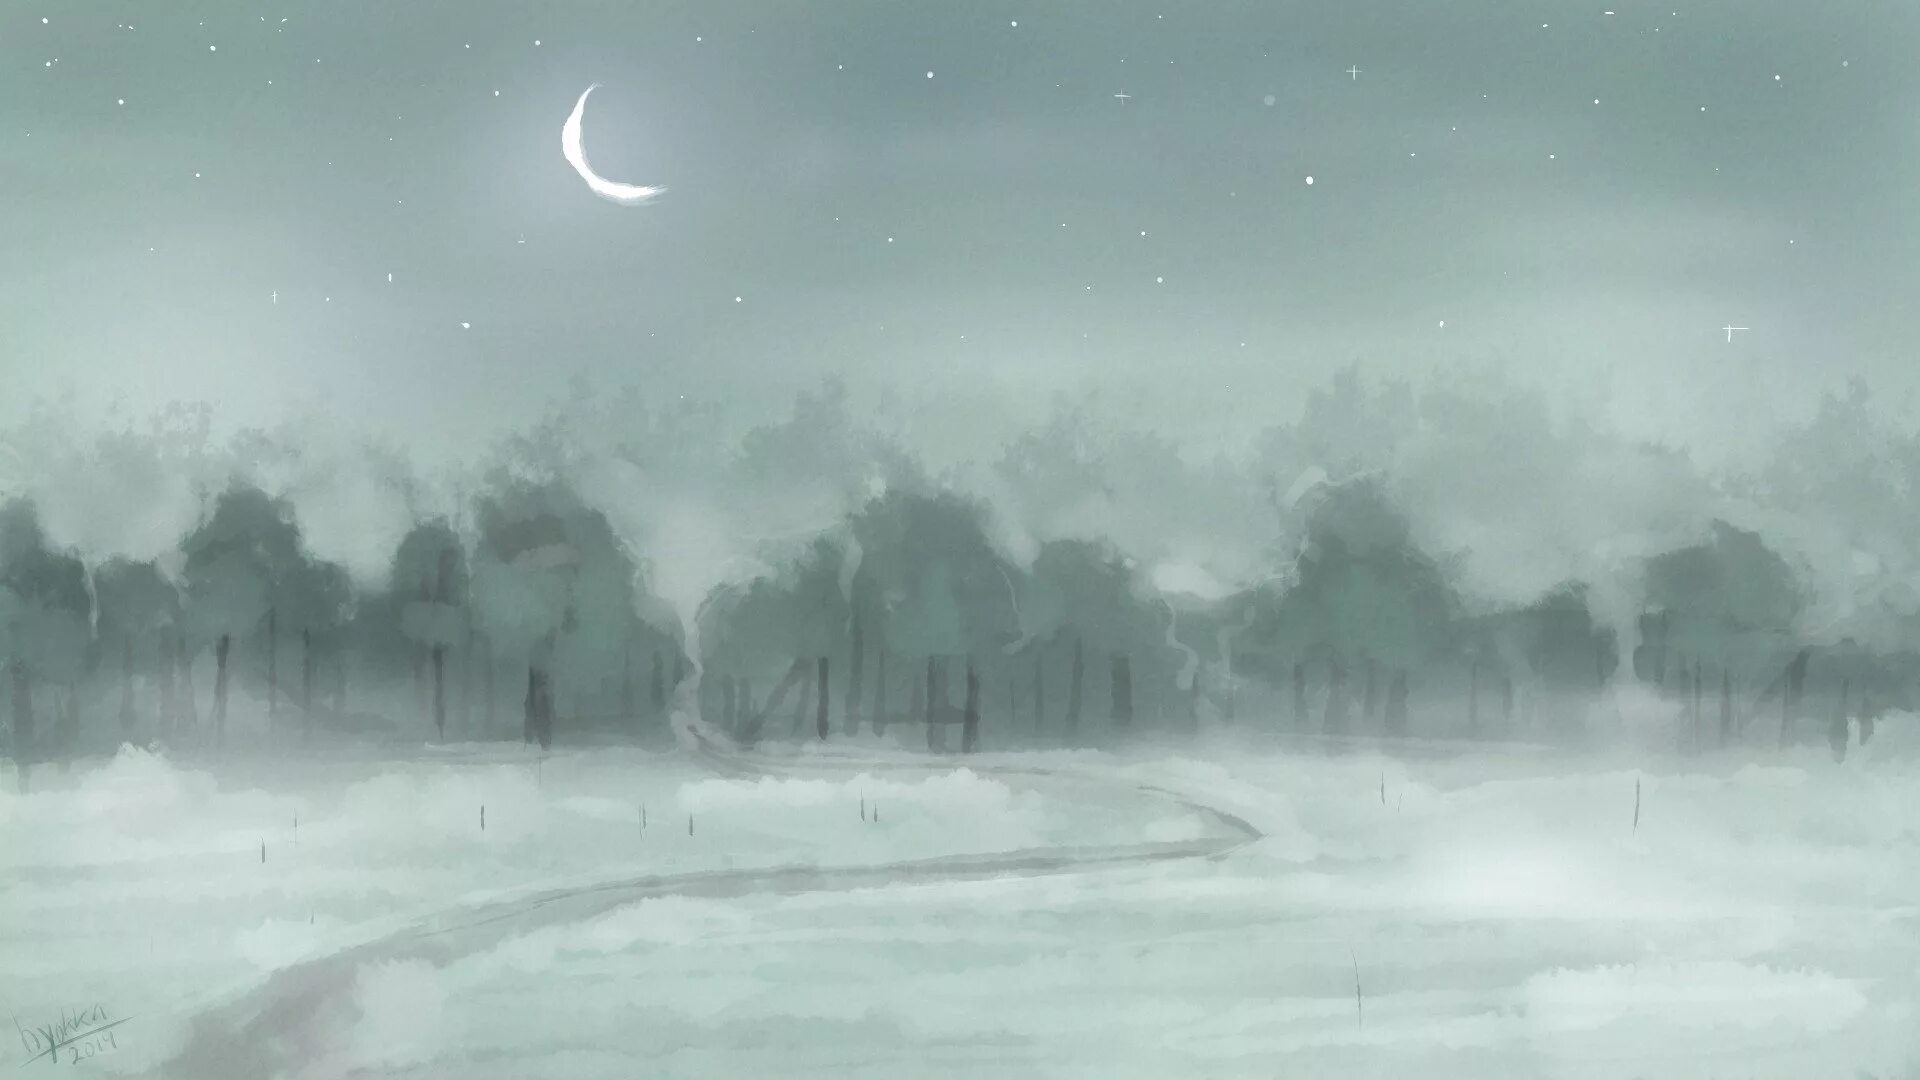 Lonely moon. Снегопад арт. Зима арт. Ночное зимнее поле. Луна туман зимой.